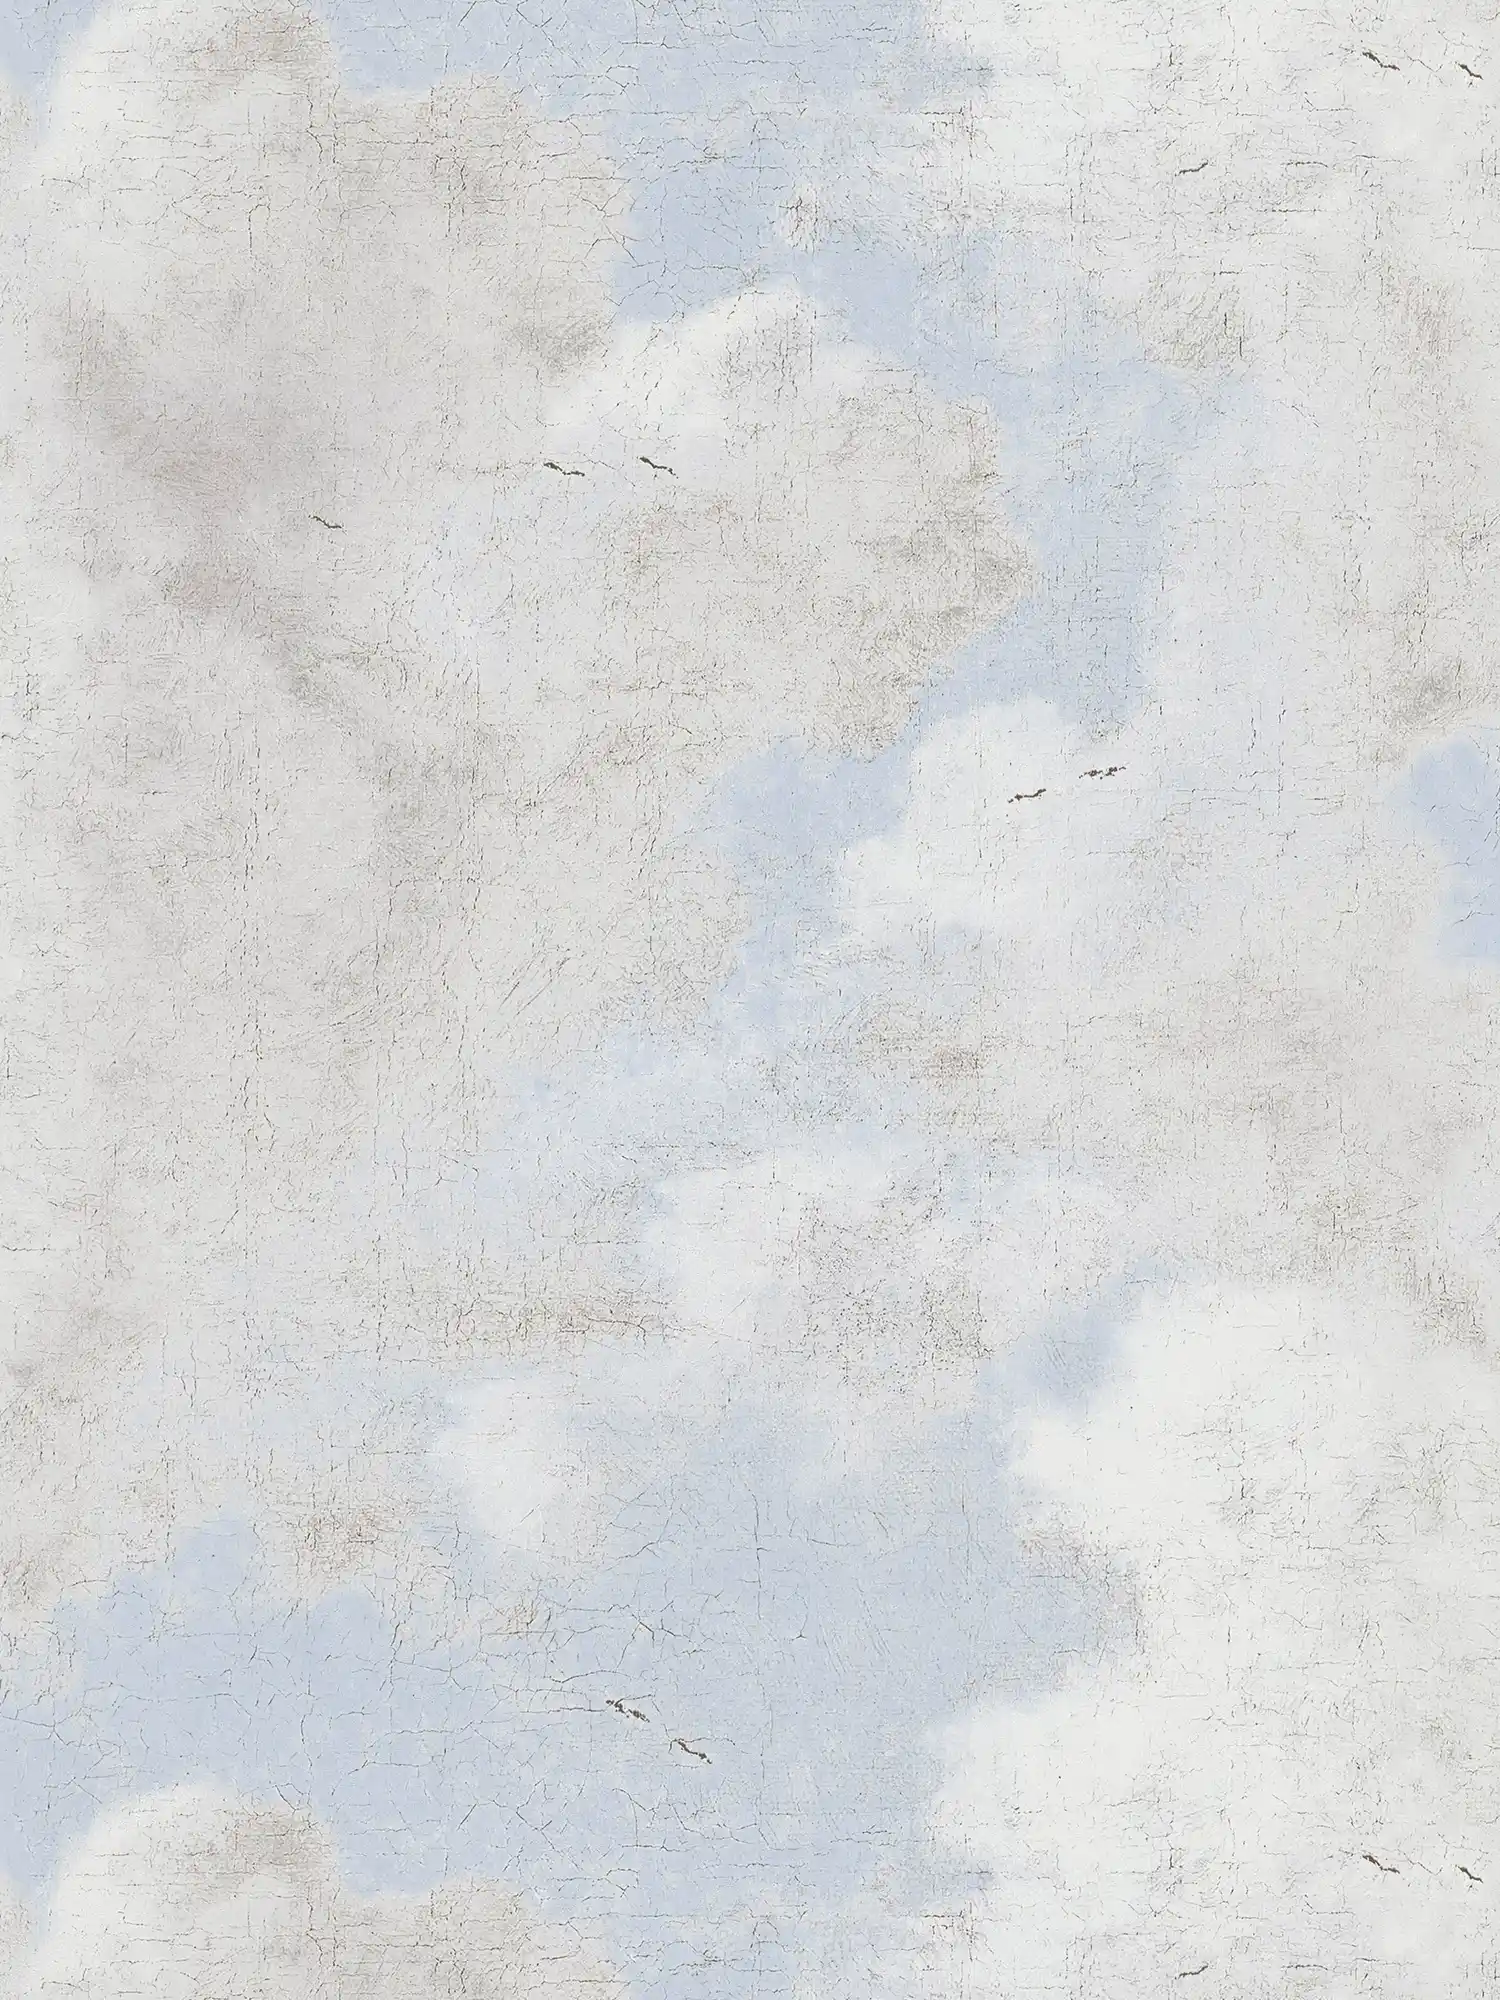 Himmel-Tapete im klassischen Kunststil – Grau, Blau
